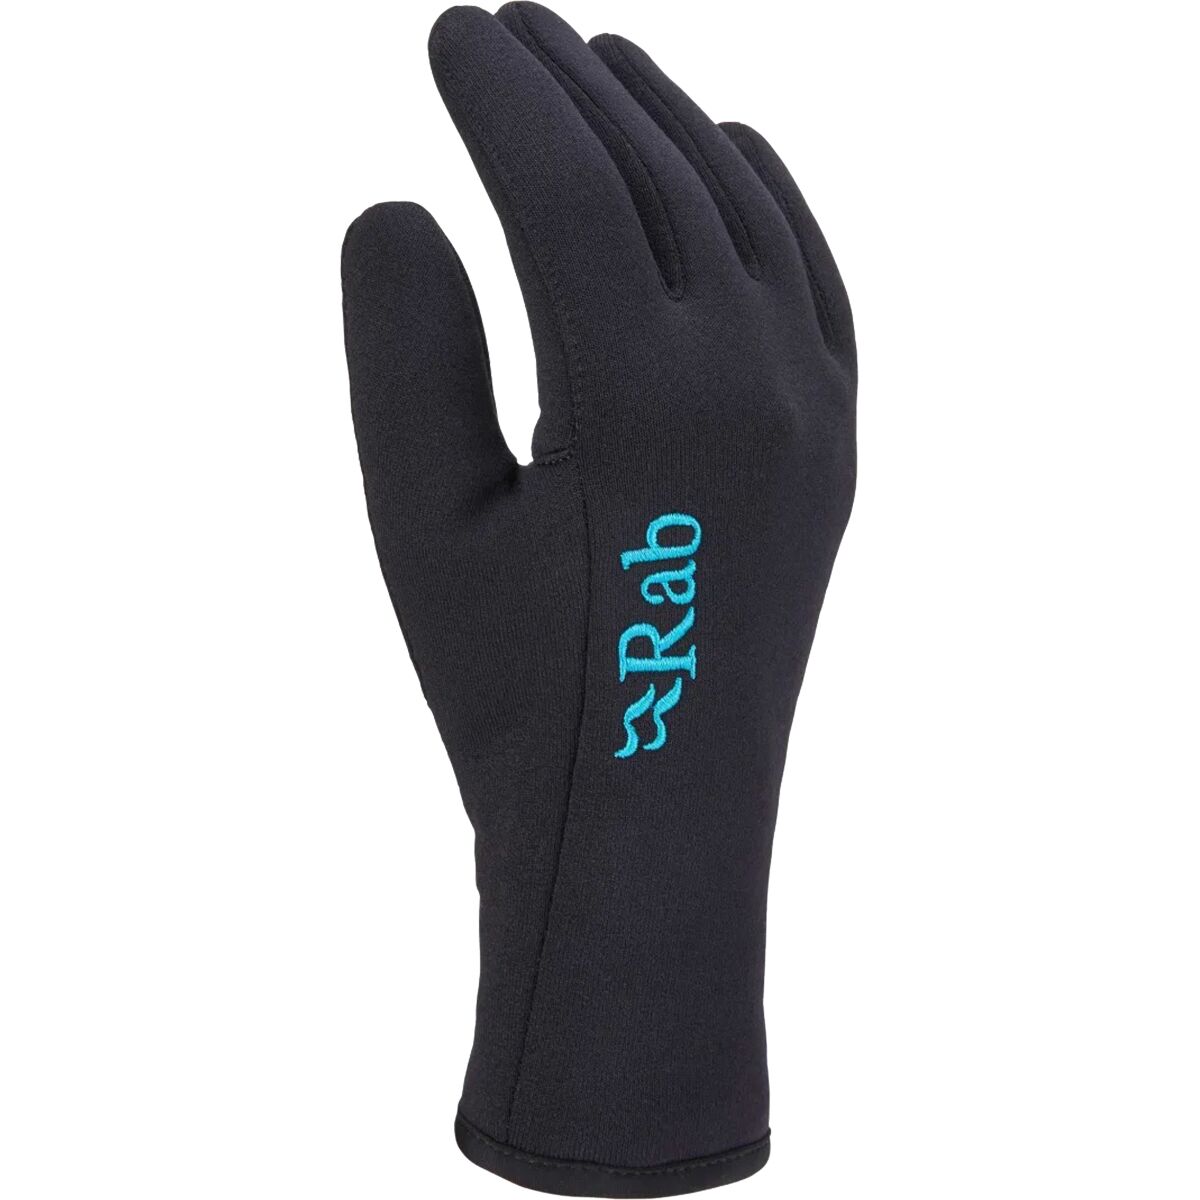 Rab Power Stretch Pro Glove - Women's